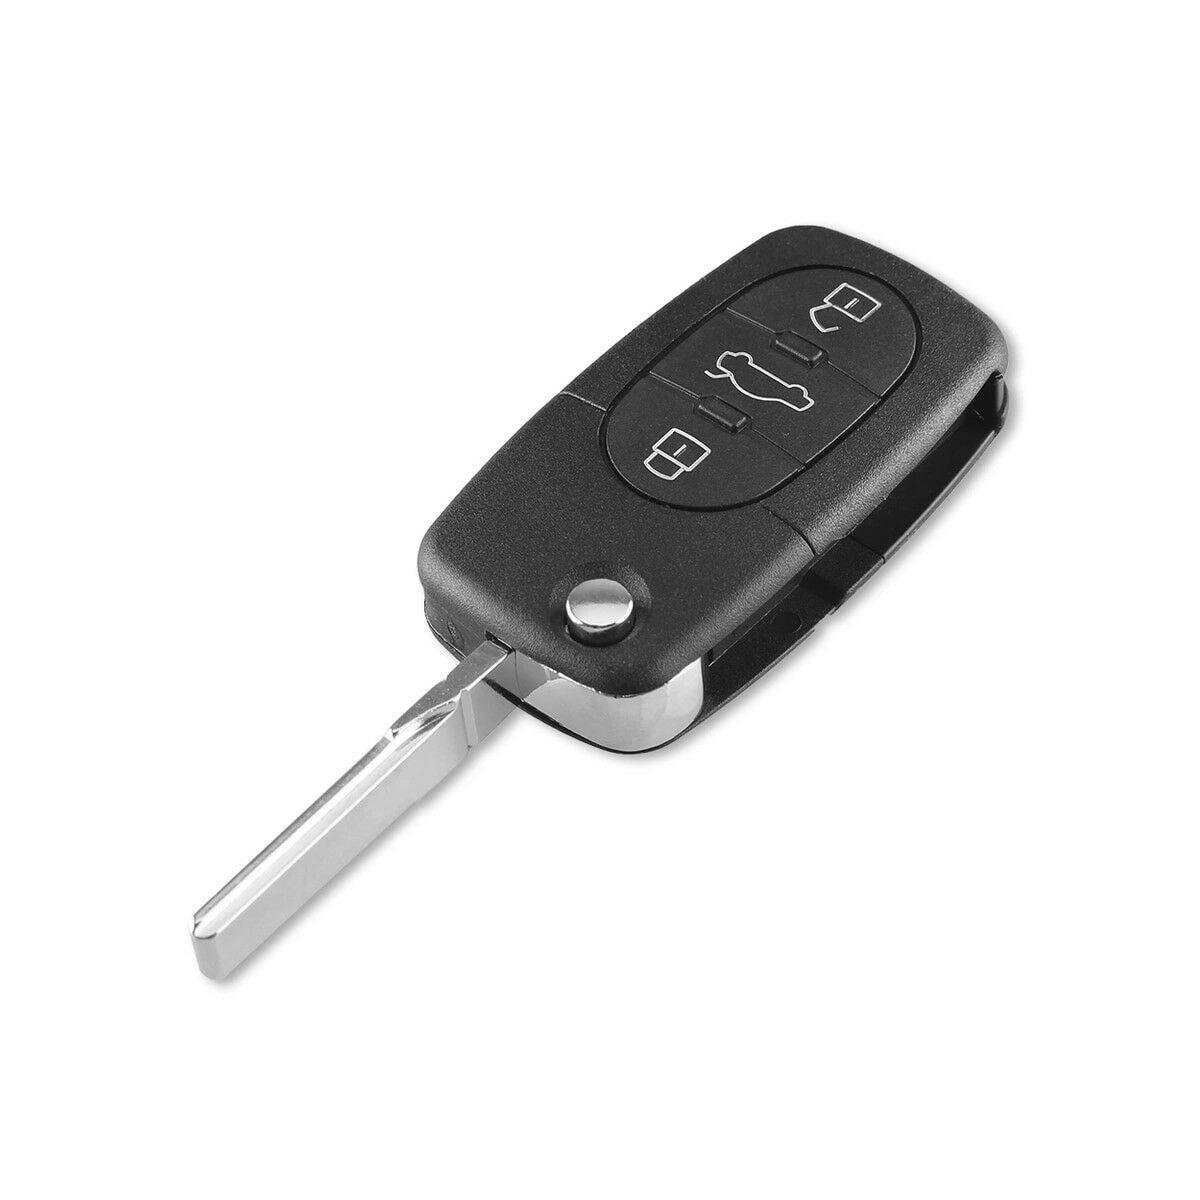 Audi chiave guscio telecomando 3 tasti chiavi auto audi a1 a3 a4 a6 a8 q5  audi003